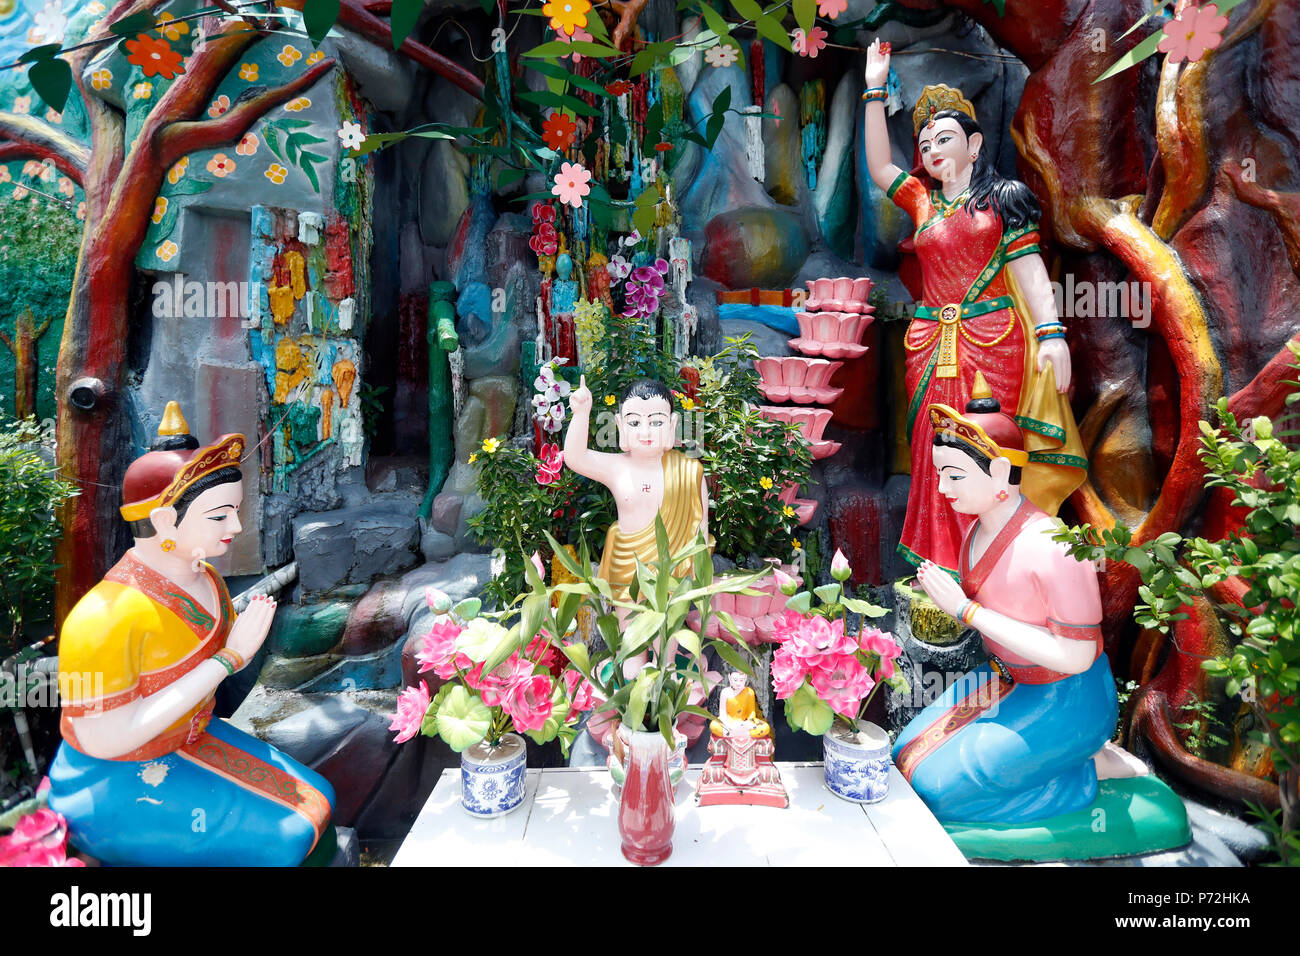 Il principe Siddharta Gautama Buddha, come un bambino, Phap Van tempio buddista, Ho Chi Minh City, Vietnam, Indocina, Asia sud-orientale, Asia Foto Stock